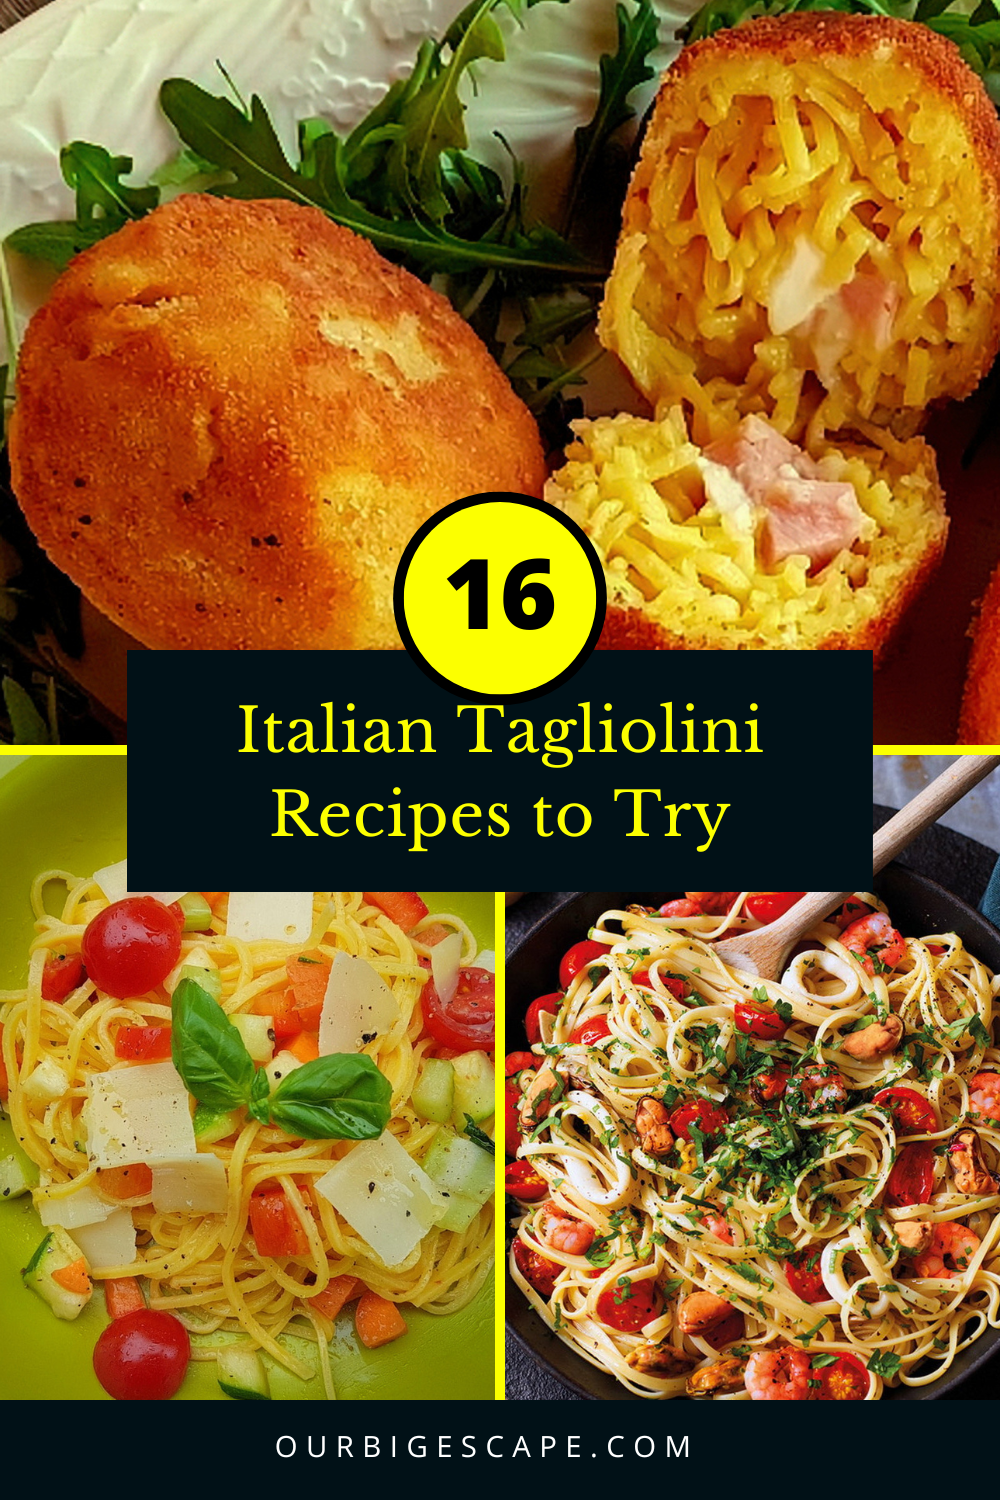 Italian Tagliolini Recipes to Try